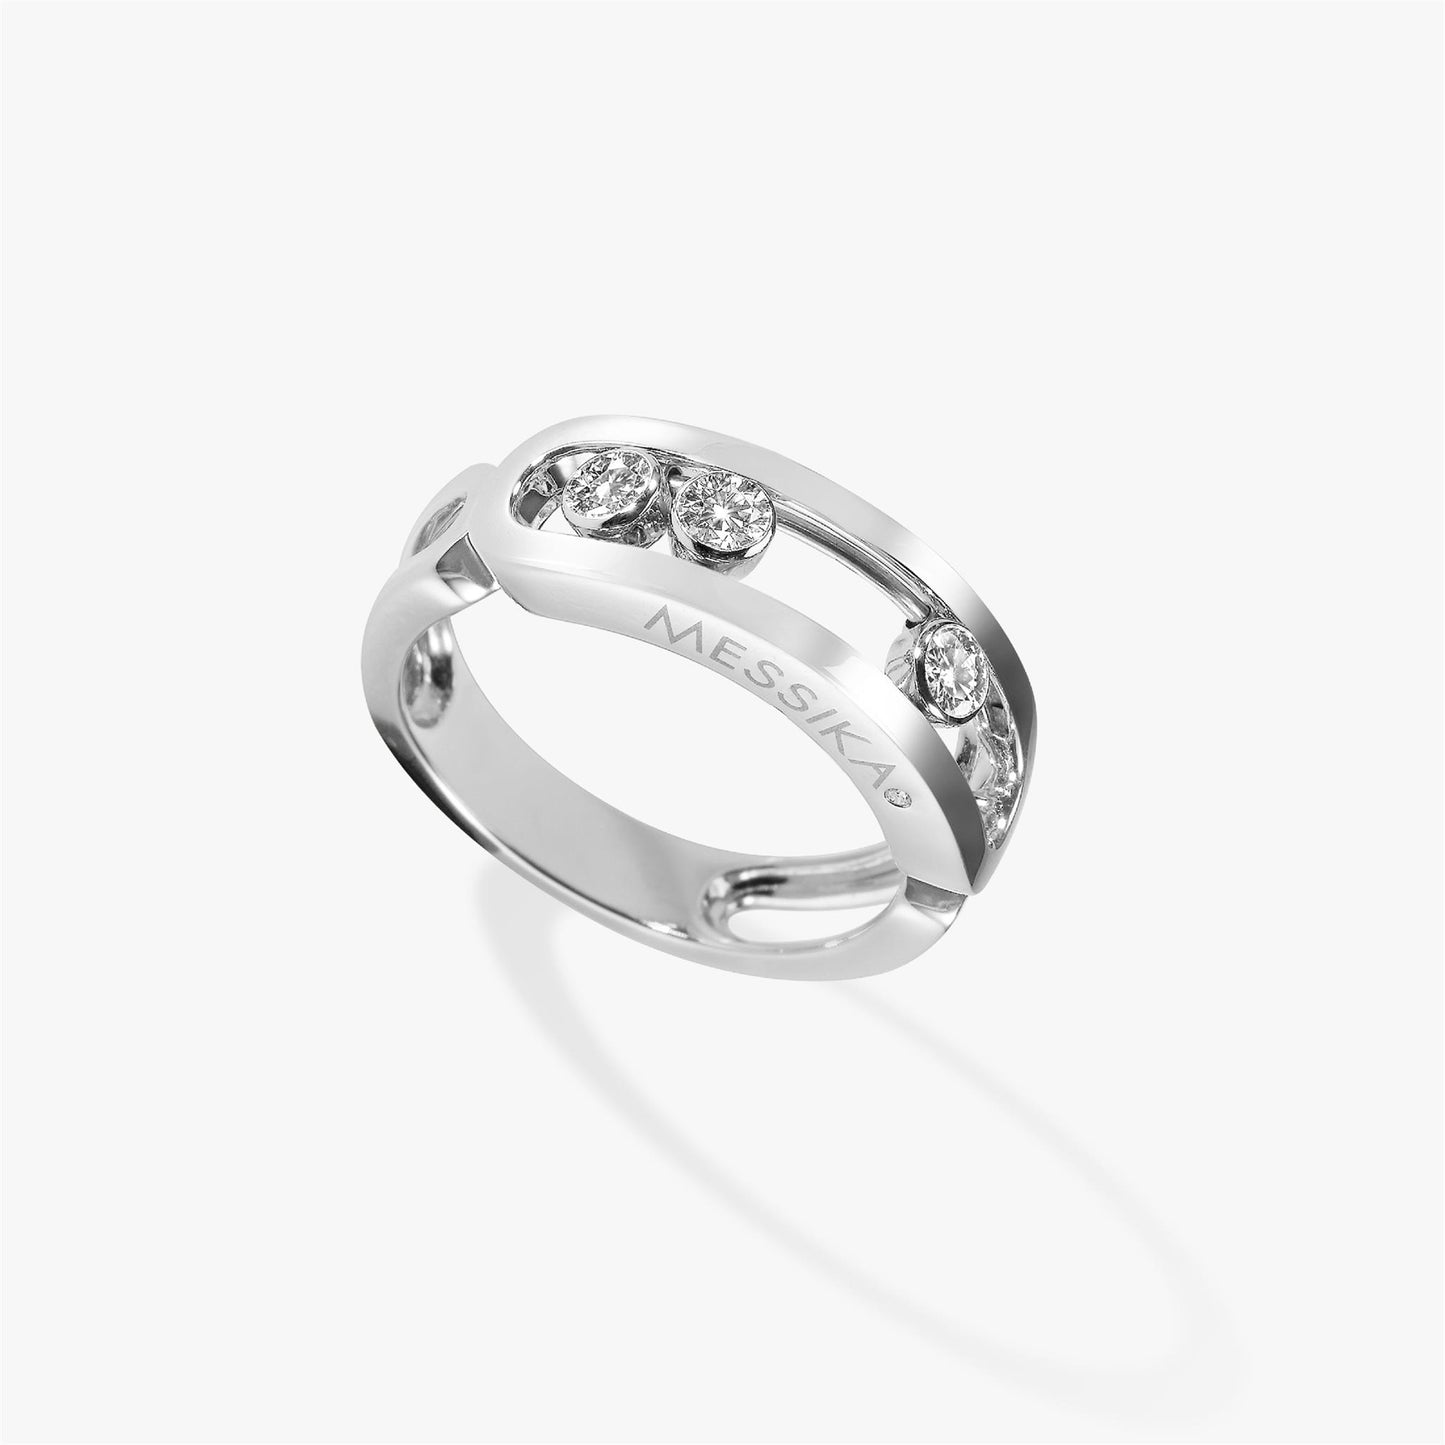 Messika Move Classique Diamond Ring